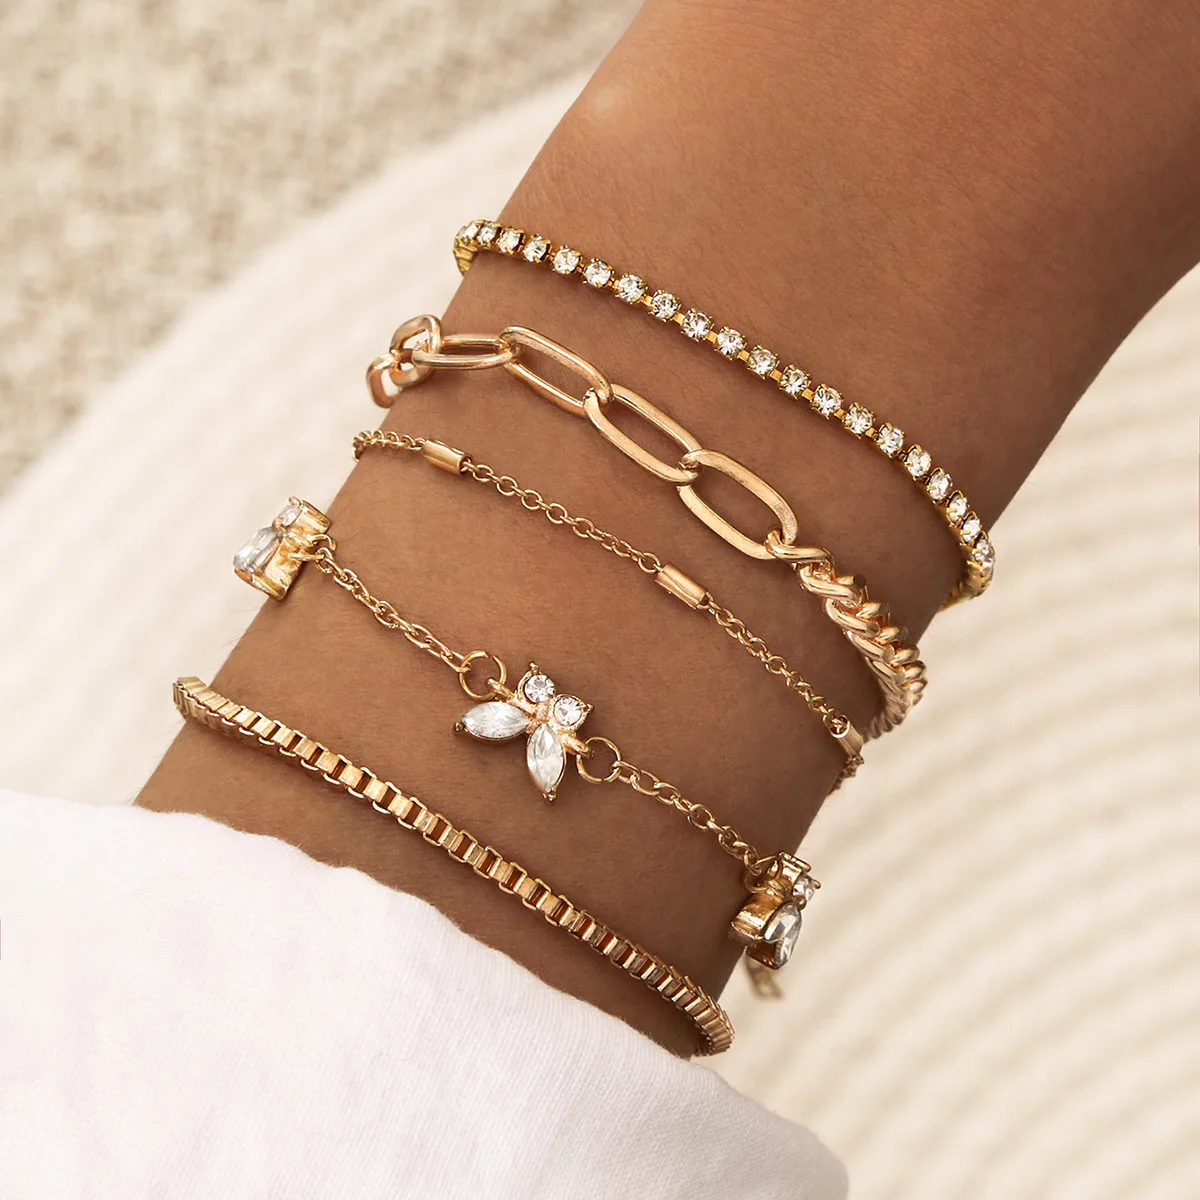 Boho Heart Charm Bracelet Set For Women Beads Chain Wrap Bangle Lady Girls Bohemian Jewelry Gift images - 6